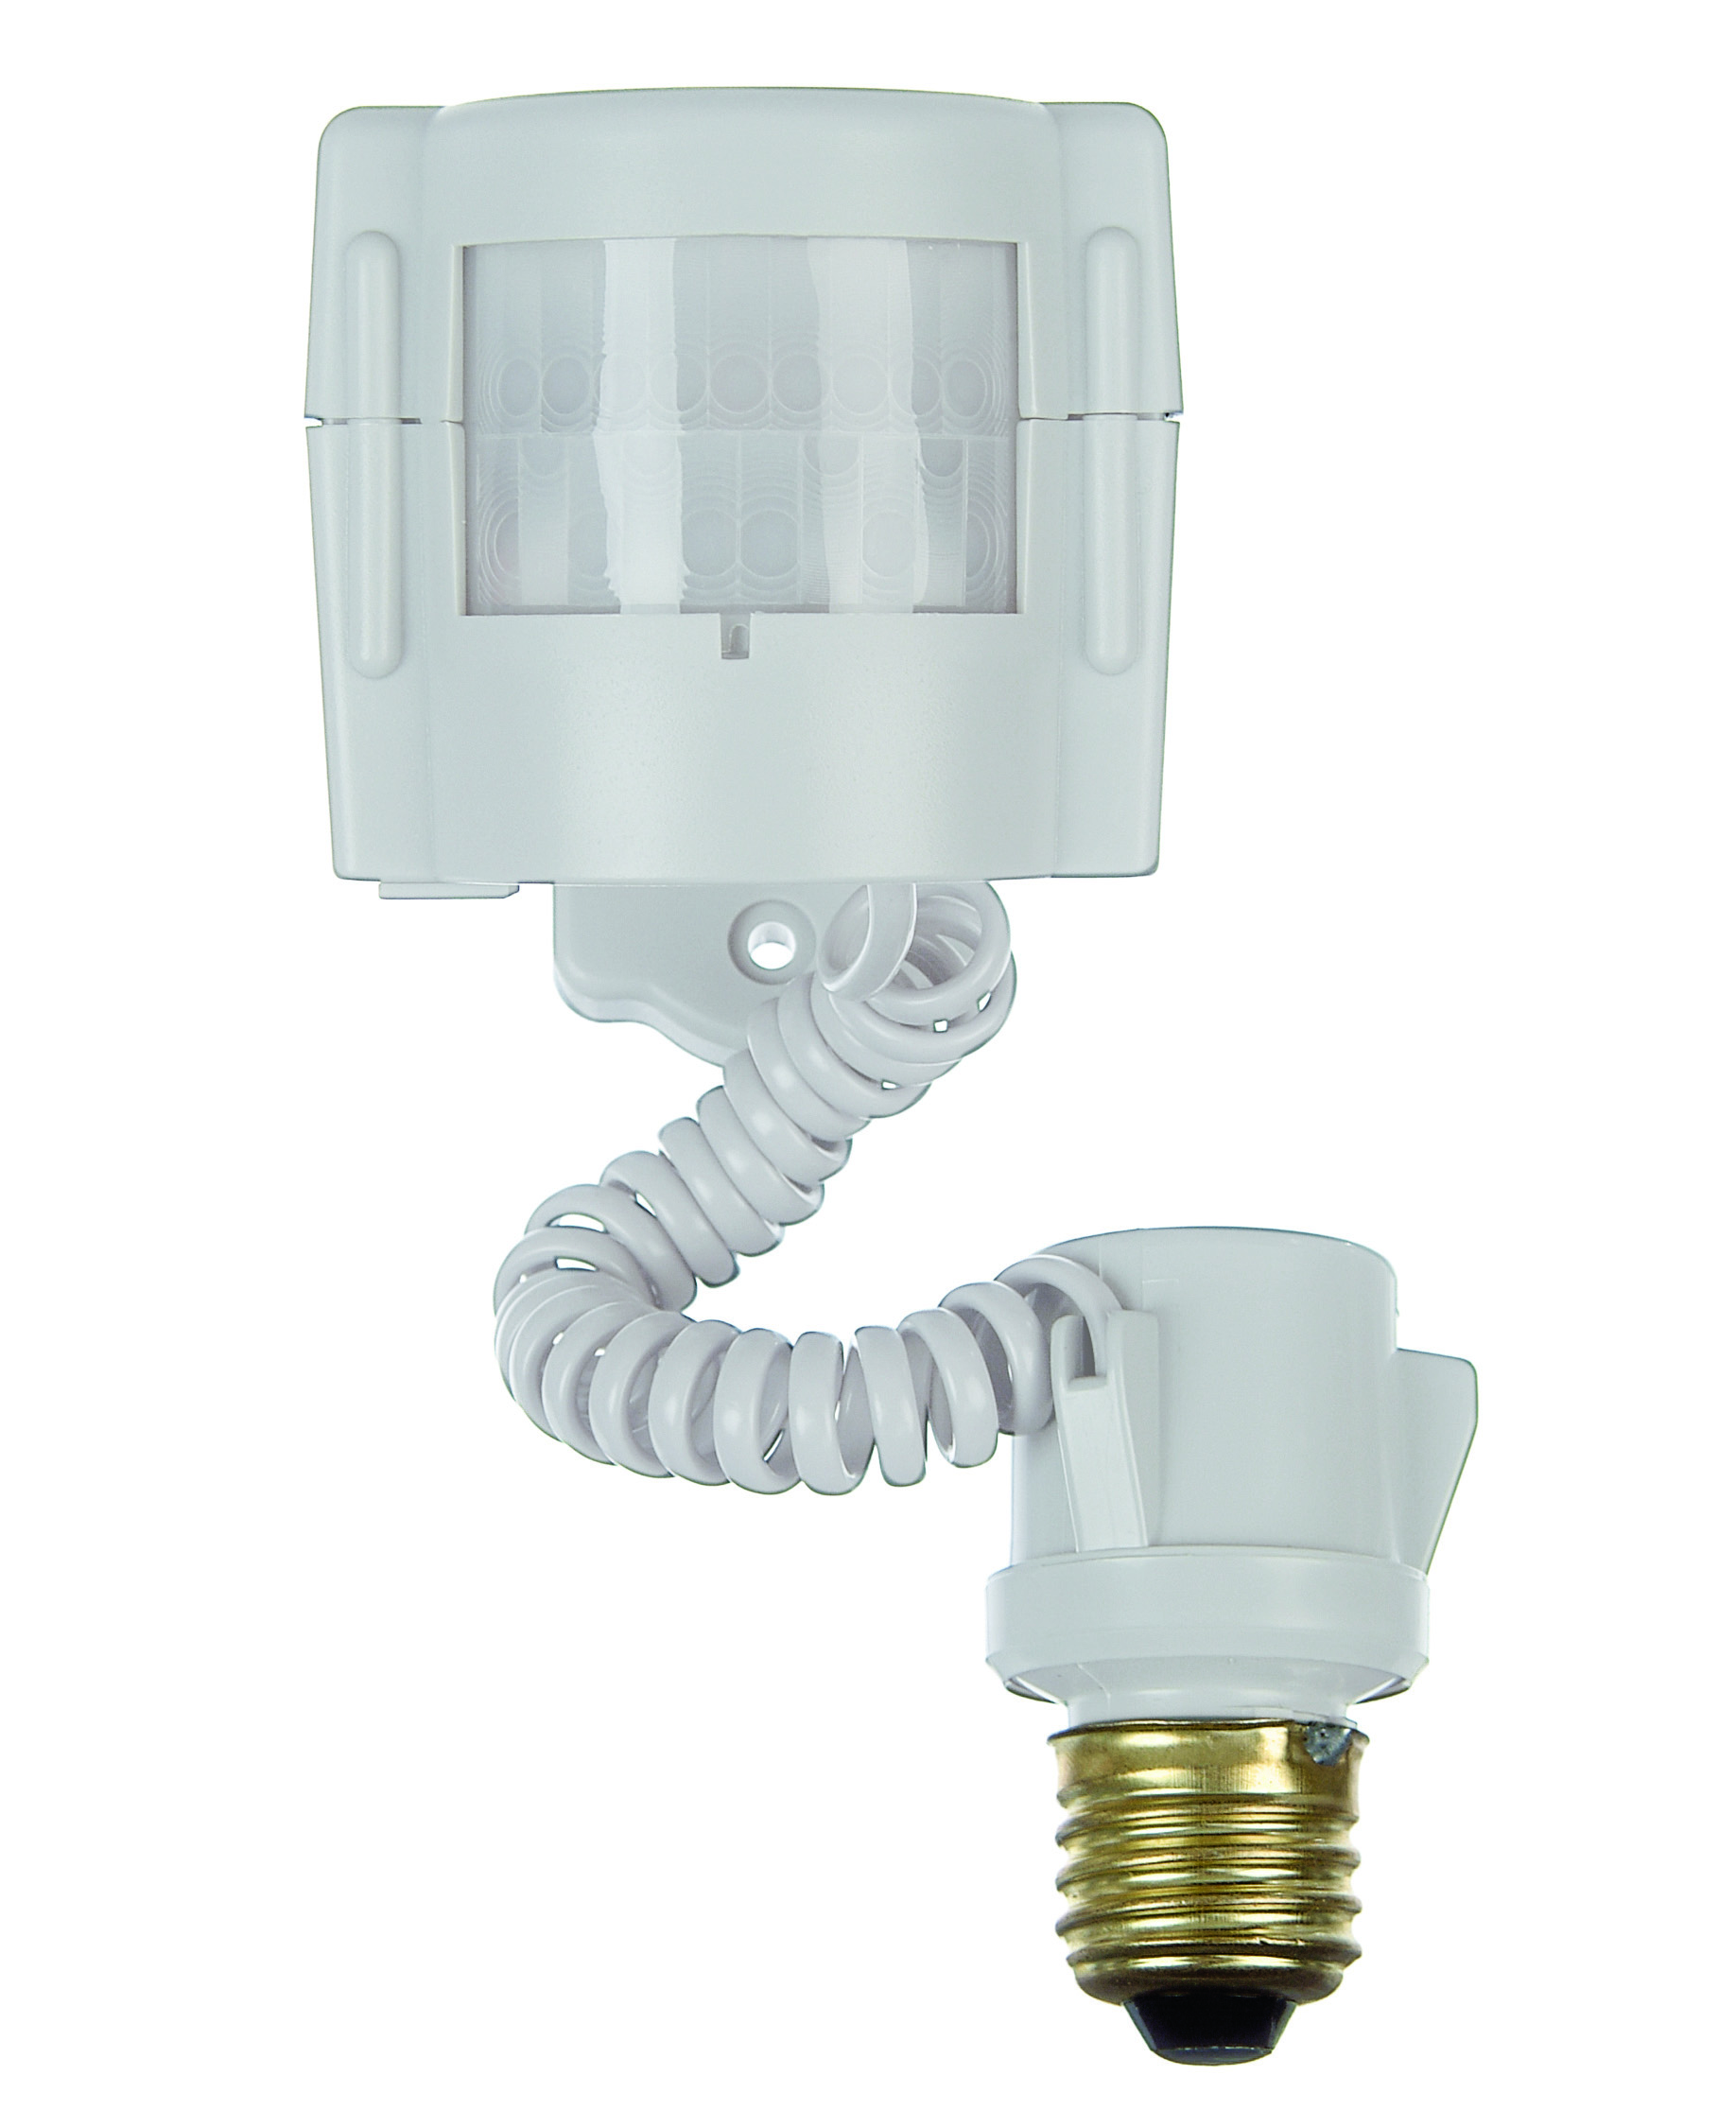 Xodus Innovations Motion Sensor Light Control 2-Pack White - TransNorth Ltd Do You Need Special Bulbs For Motion Sensor Lights